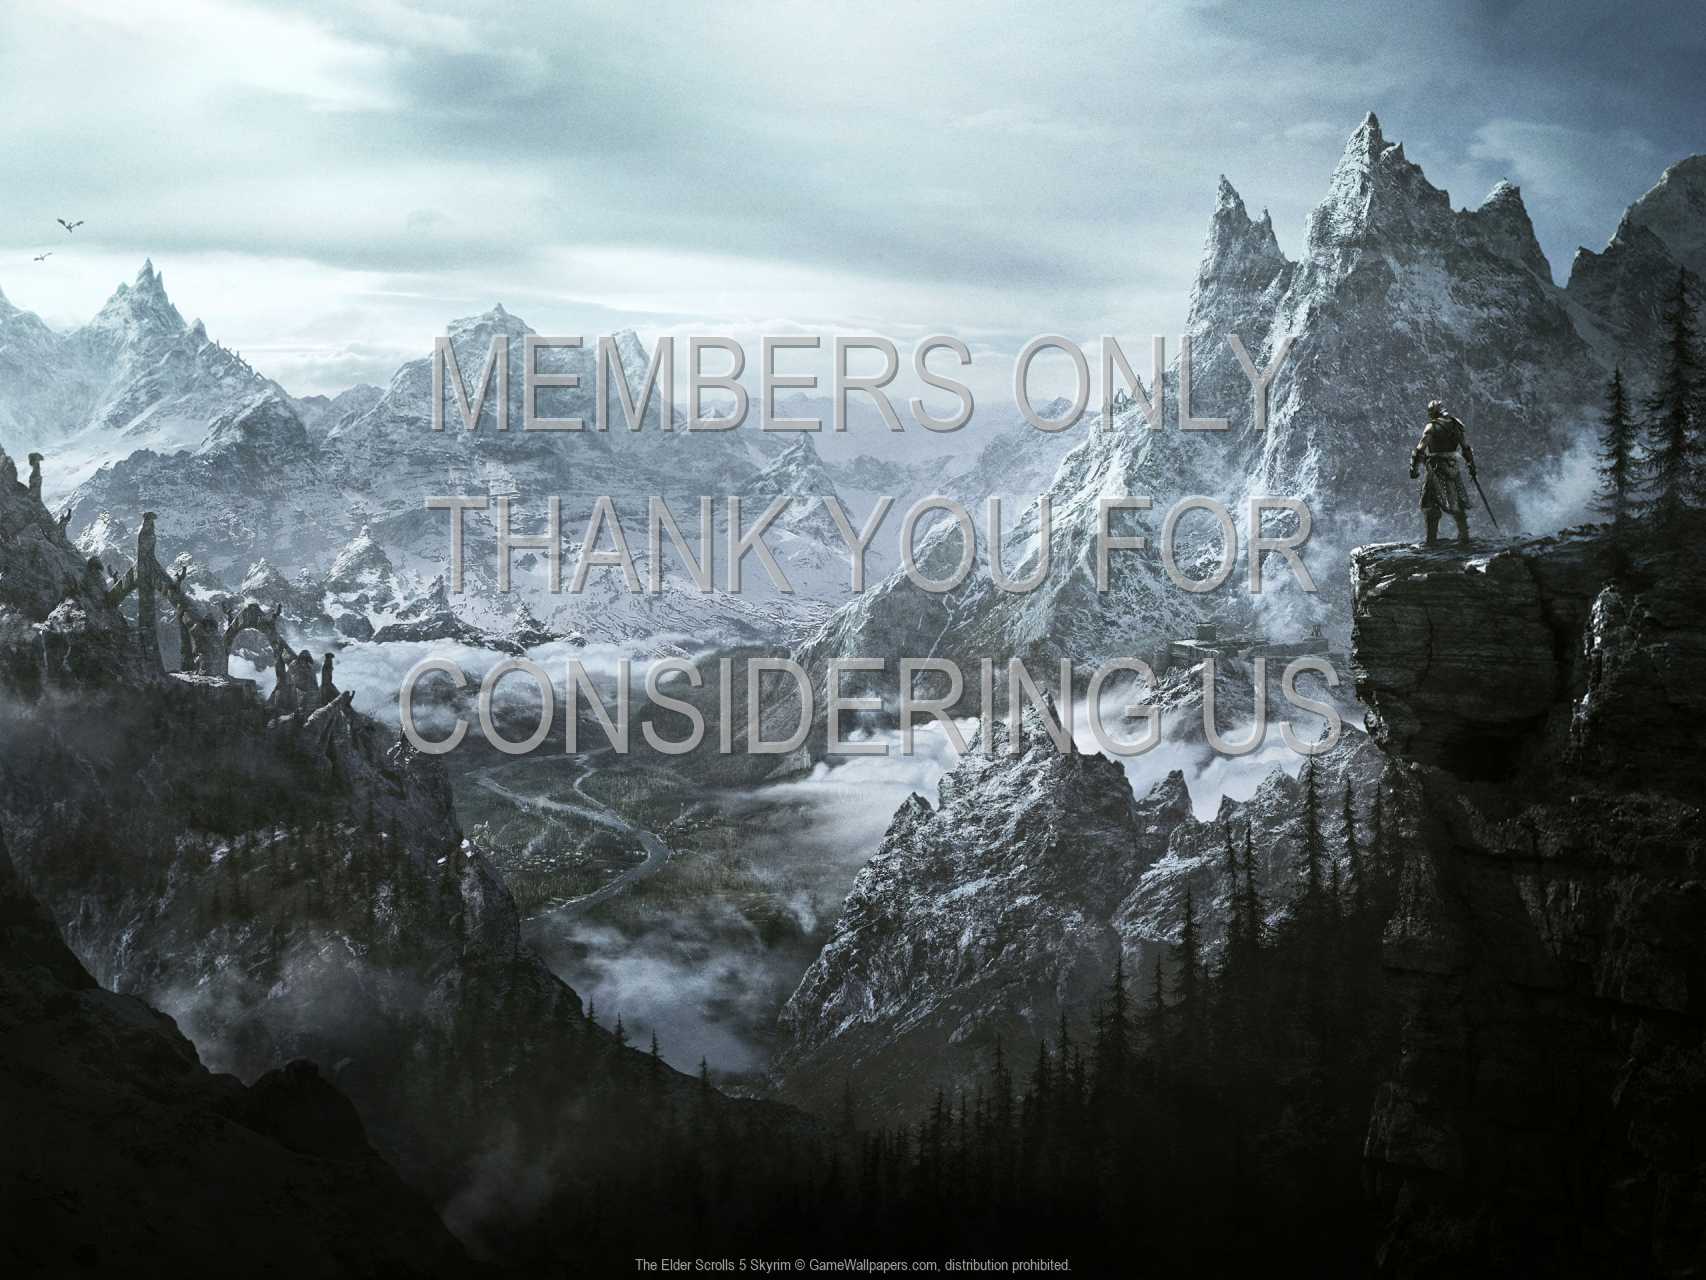 The Elder Scrolls 5: Skyrim 720p Horizontal Mobile wallpaper or background 08